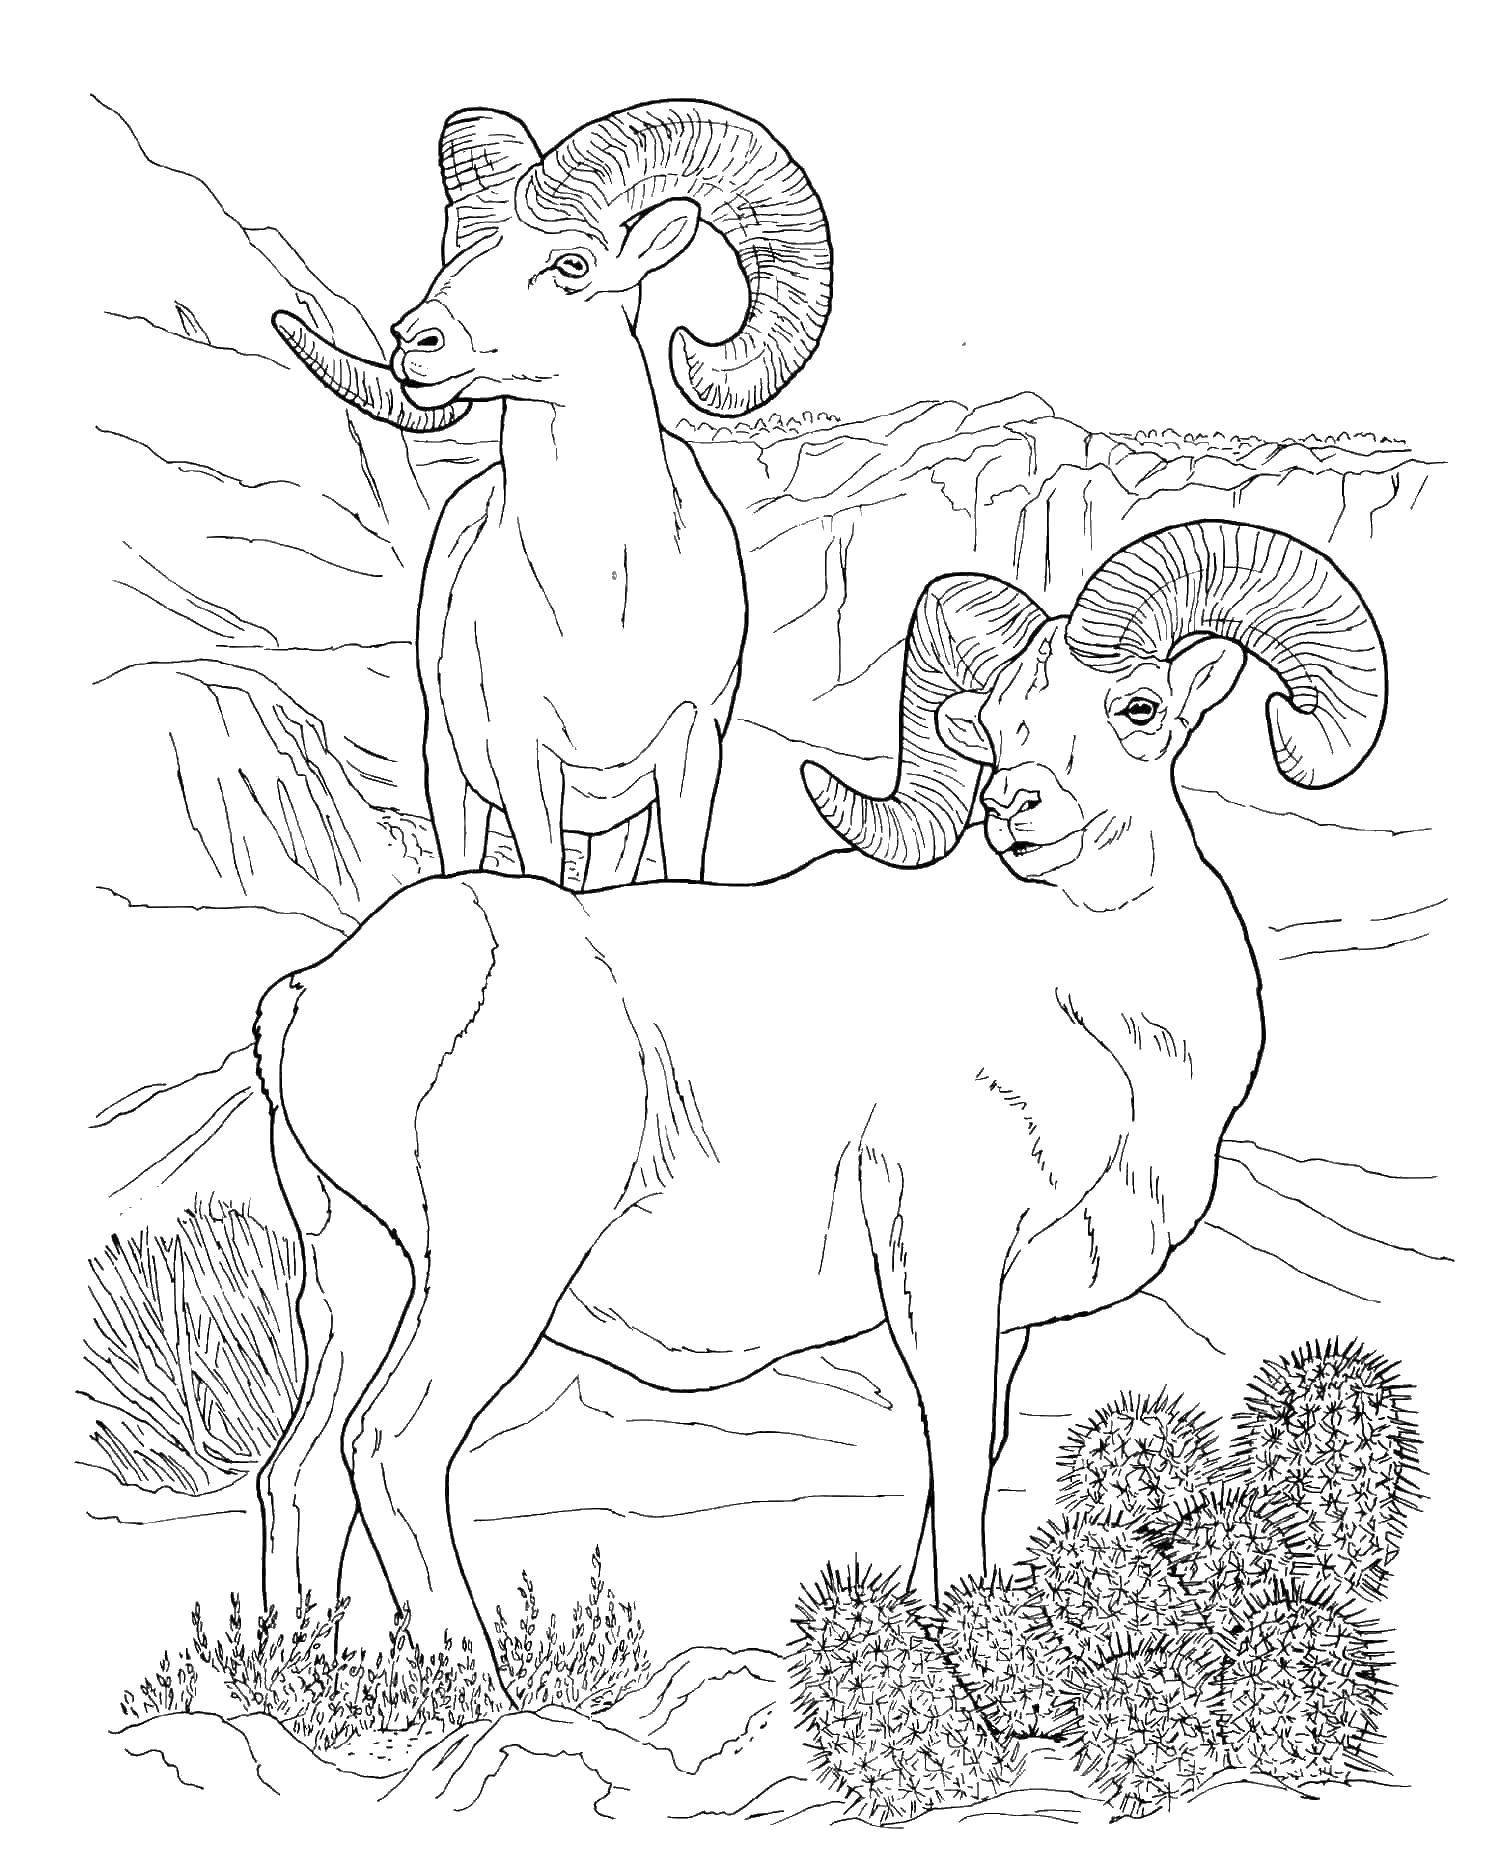 Coloring Horned sheep. Category Animals. Tags:  sheep, sheep.